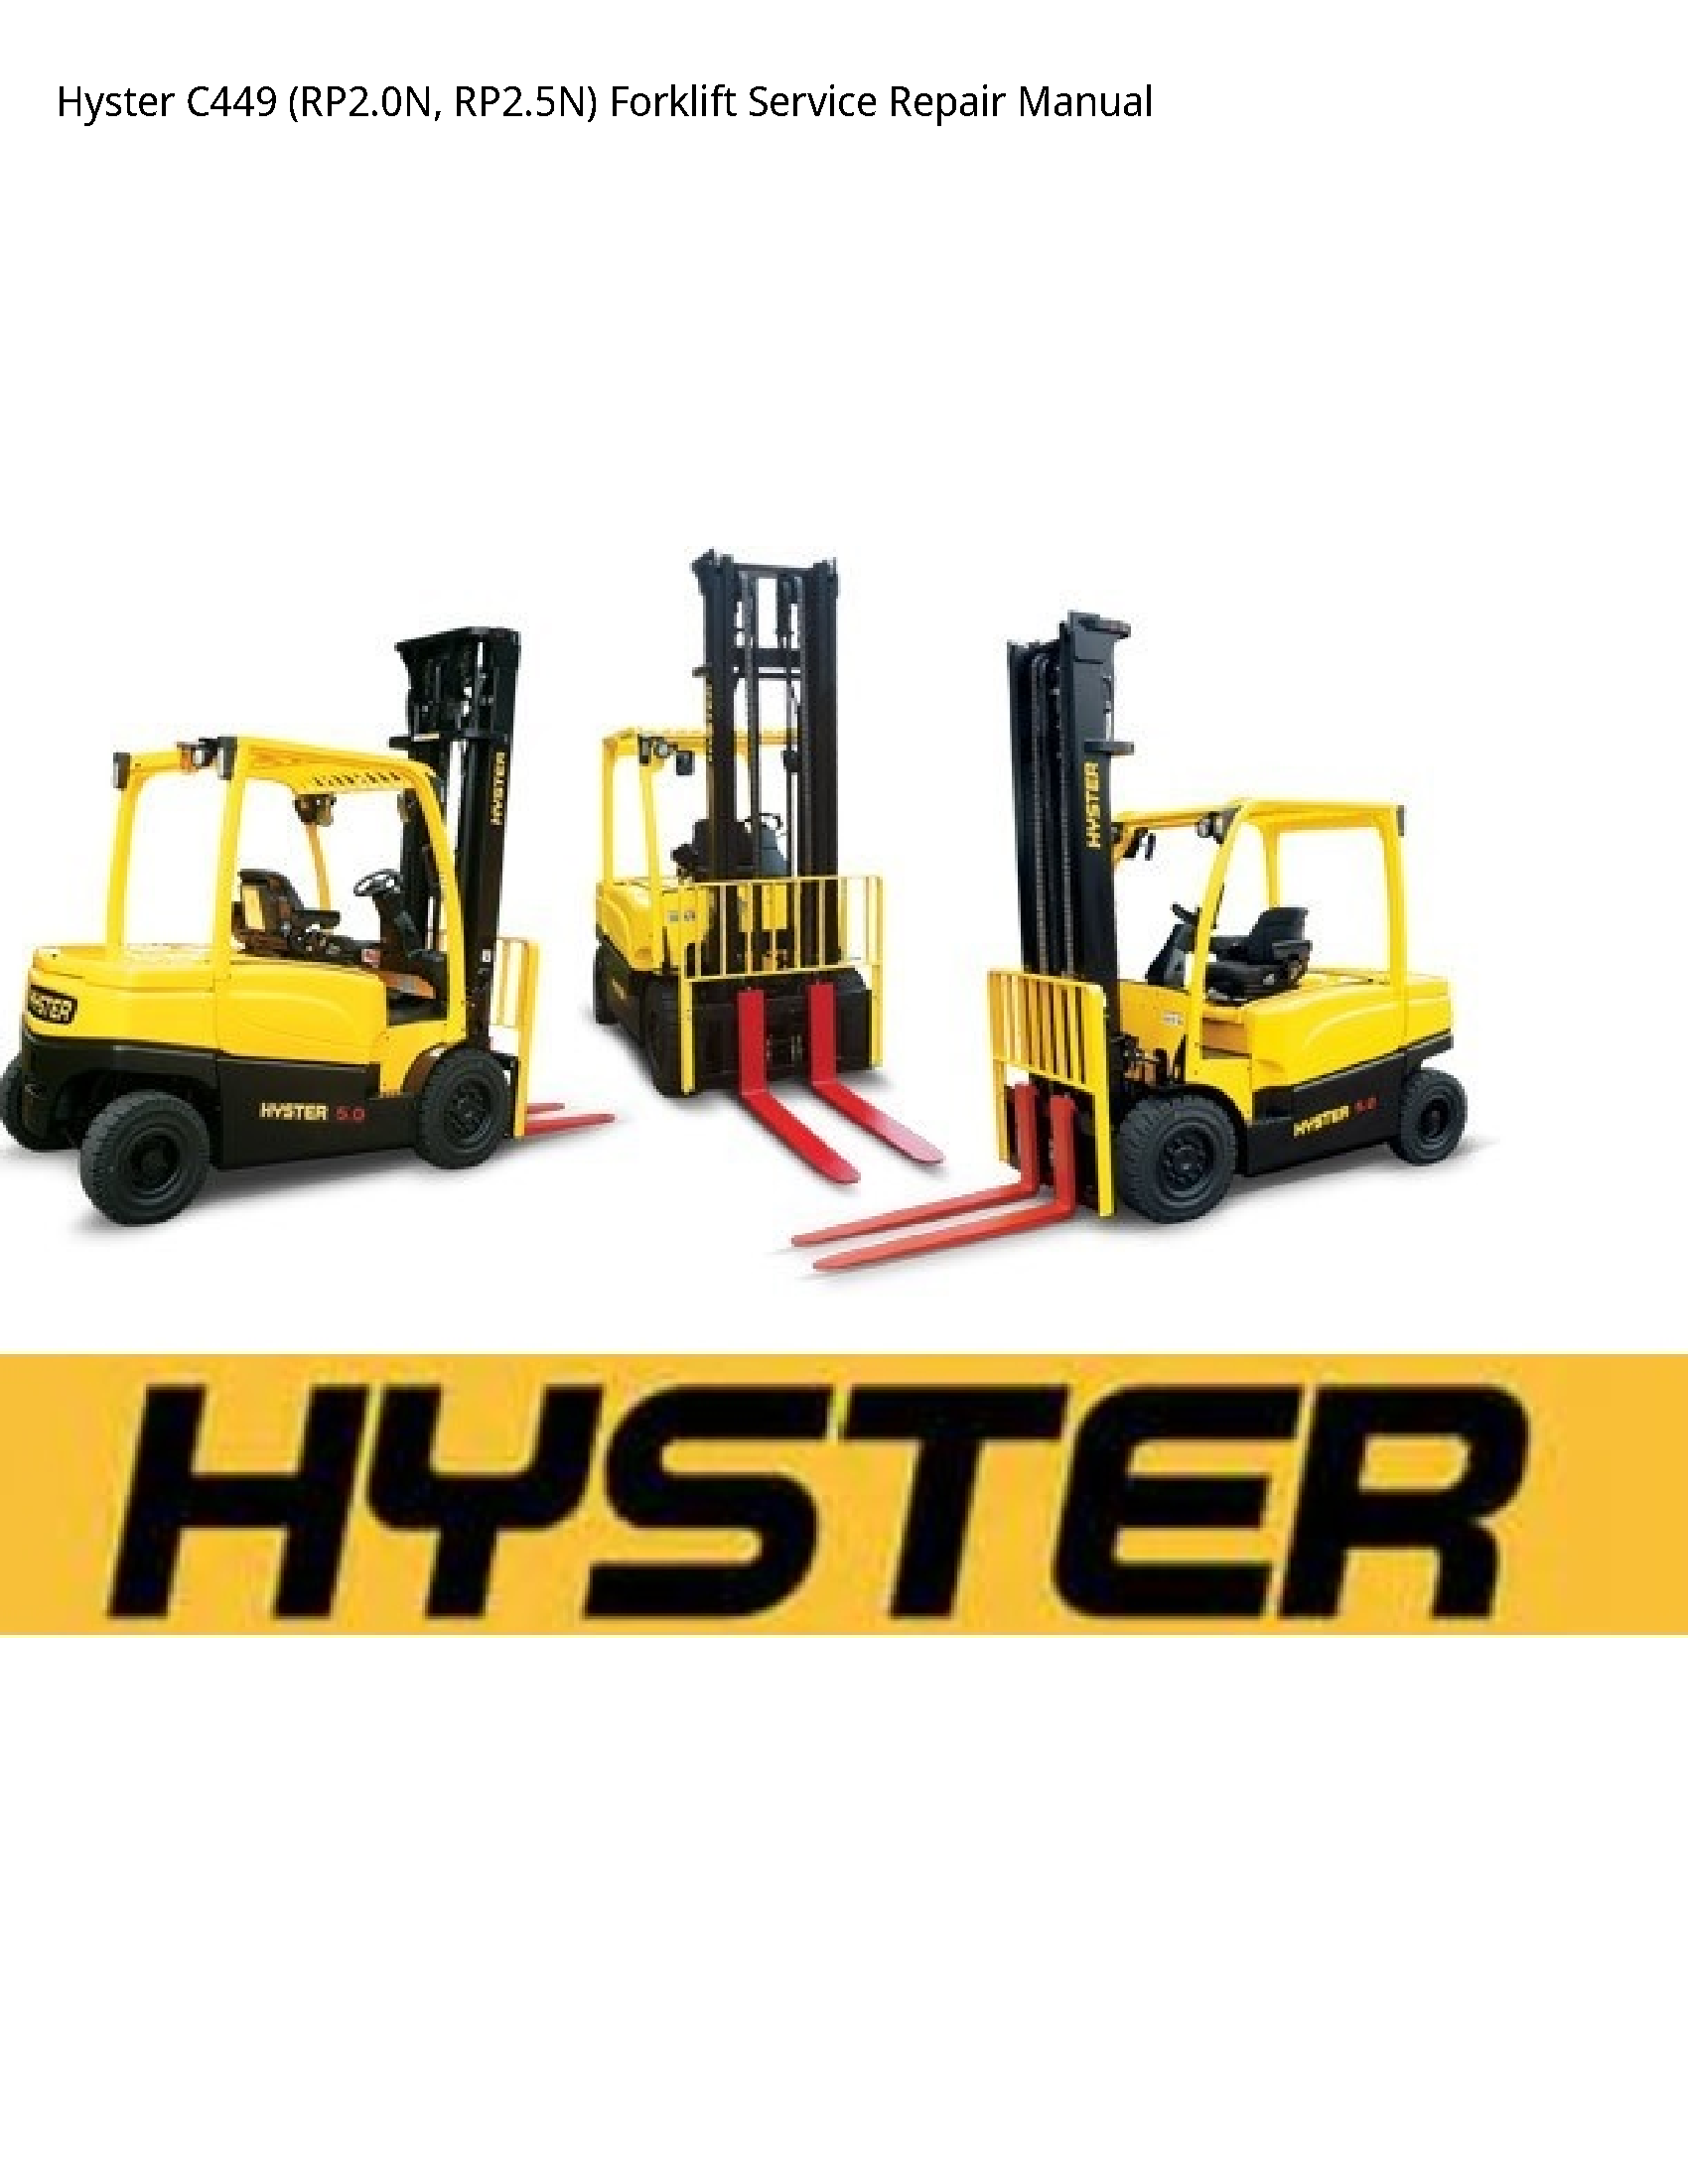 Hyster C449 Forklift manual